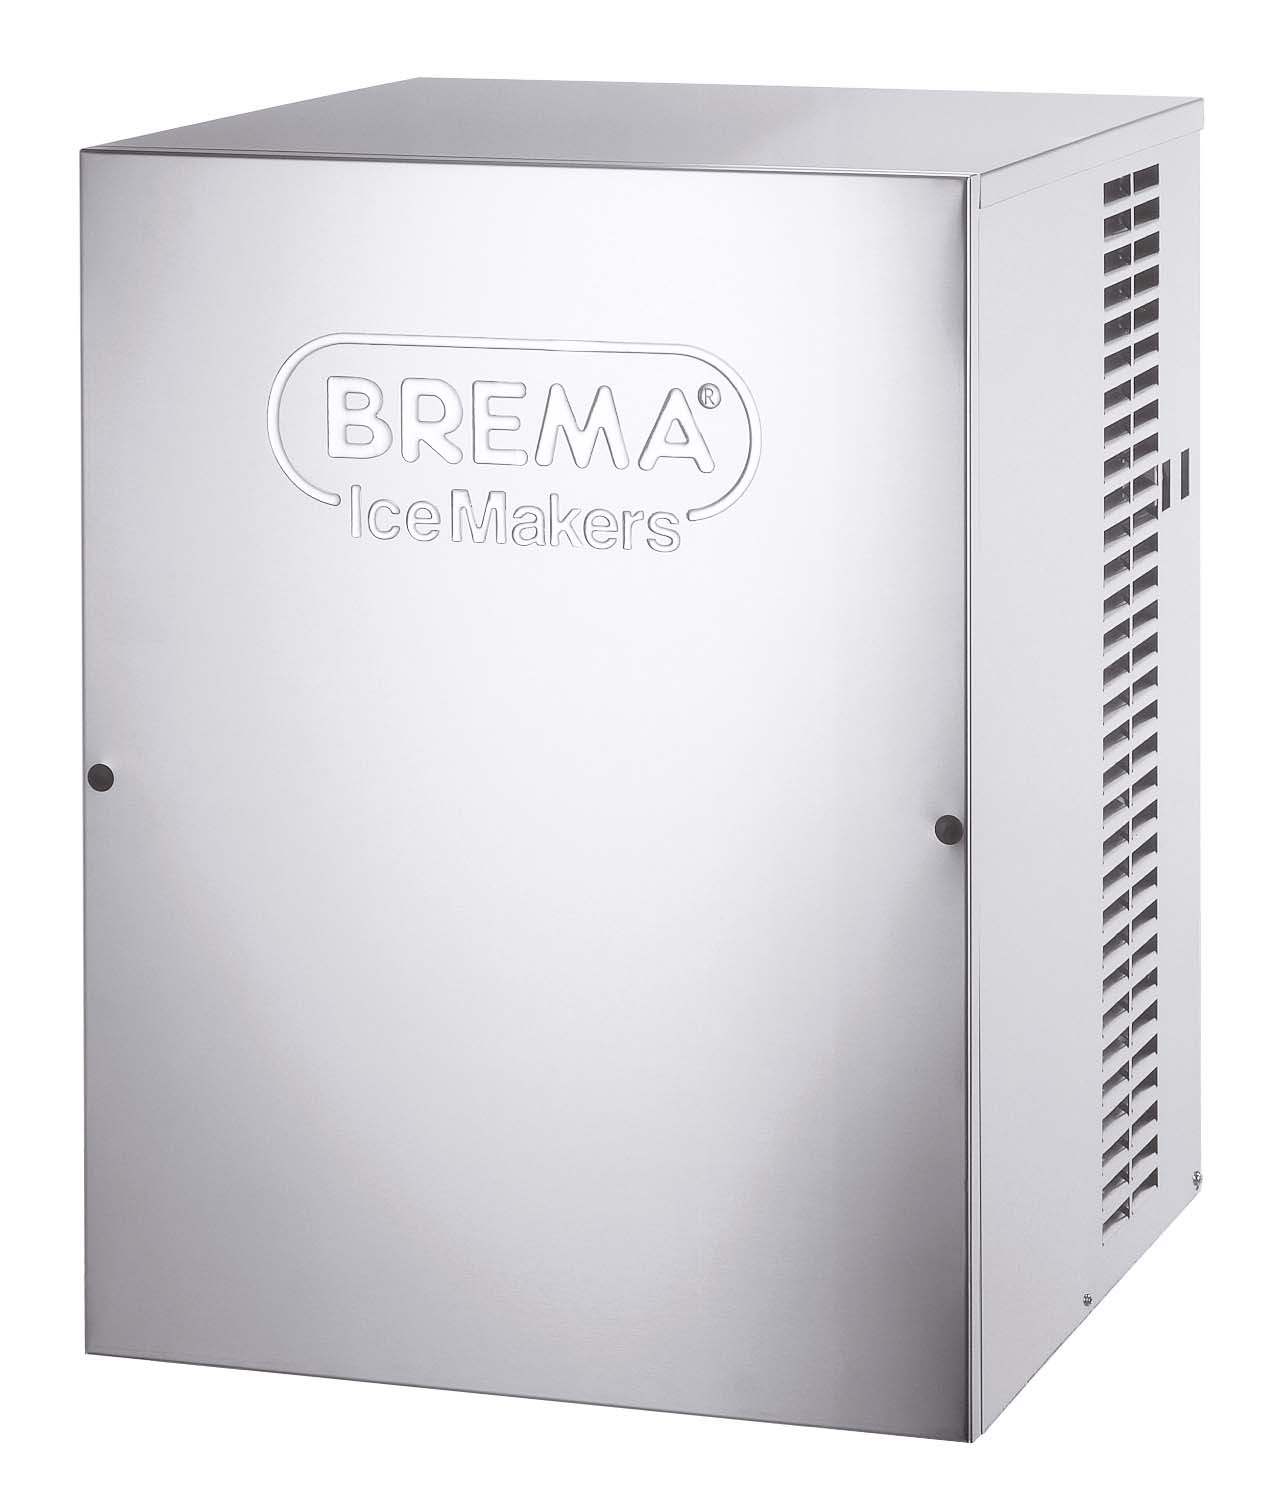 imb0140--brema-ice-maker--fast-ice--modular--140kg-per-24hrs